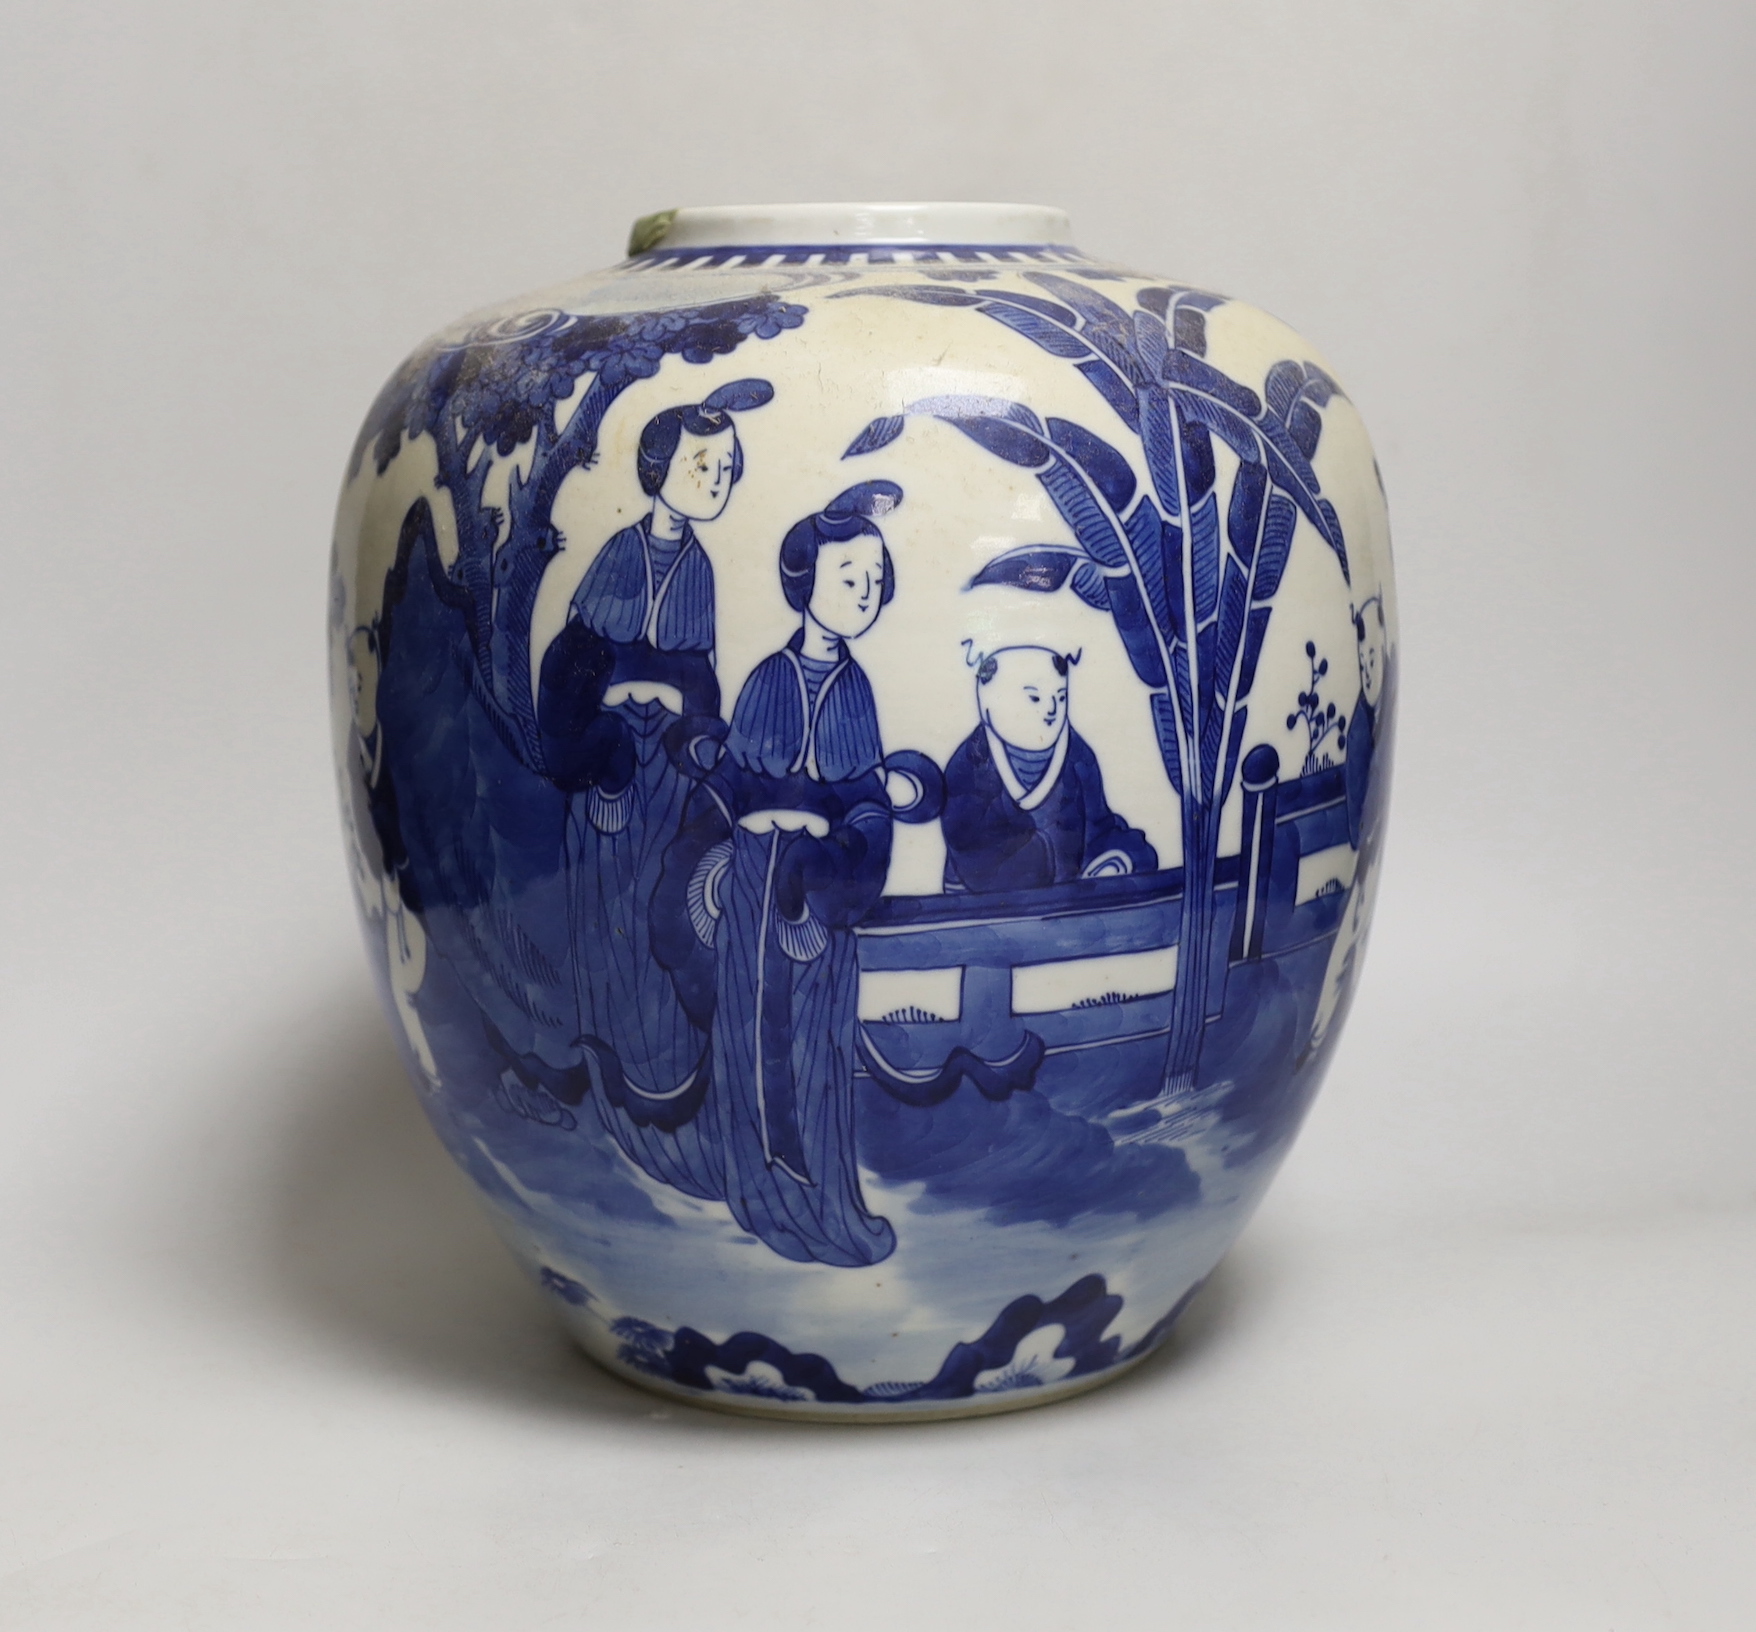 A 19th century Chinese blue and white globular jar, 25.5cm high (a.f.)